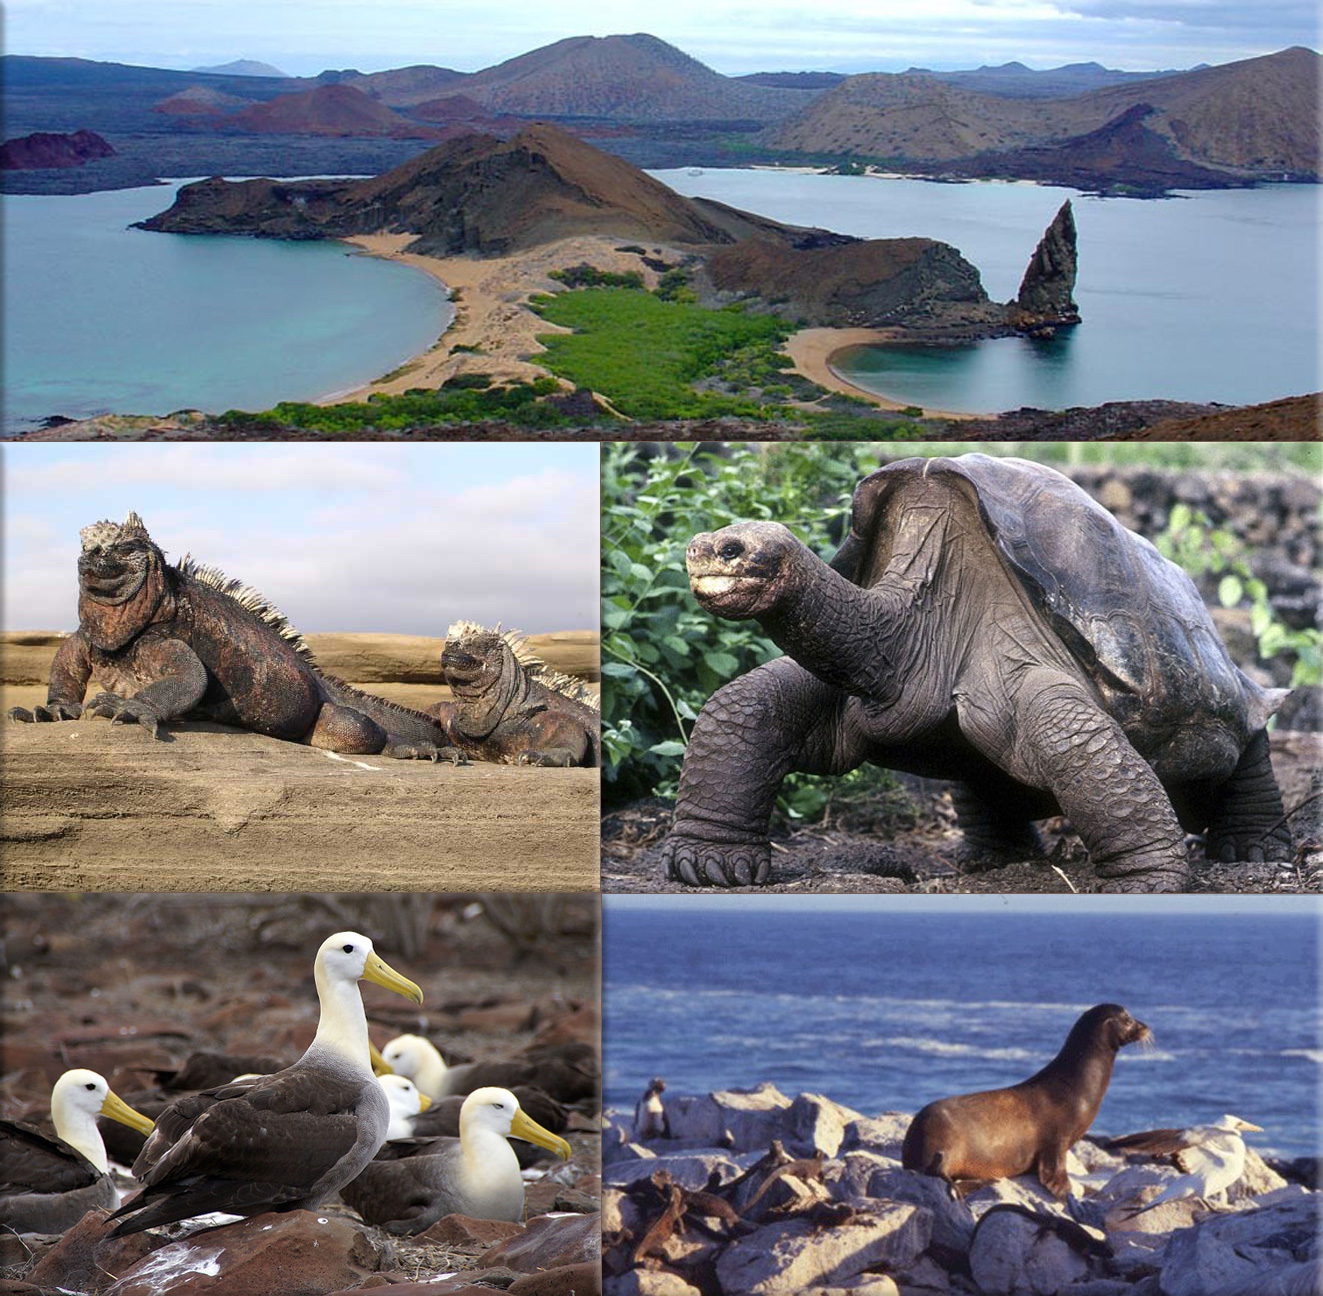 Galápagos Islands, Ecuador: Marine iguana ● Galapagos giant turtle ● Waved Albatrosses on Española ● Galapagos sea lion.